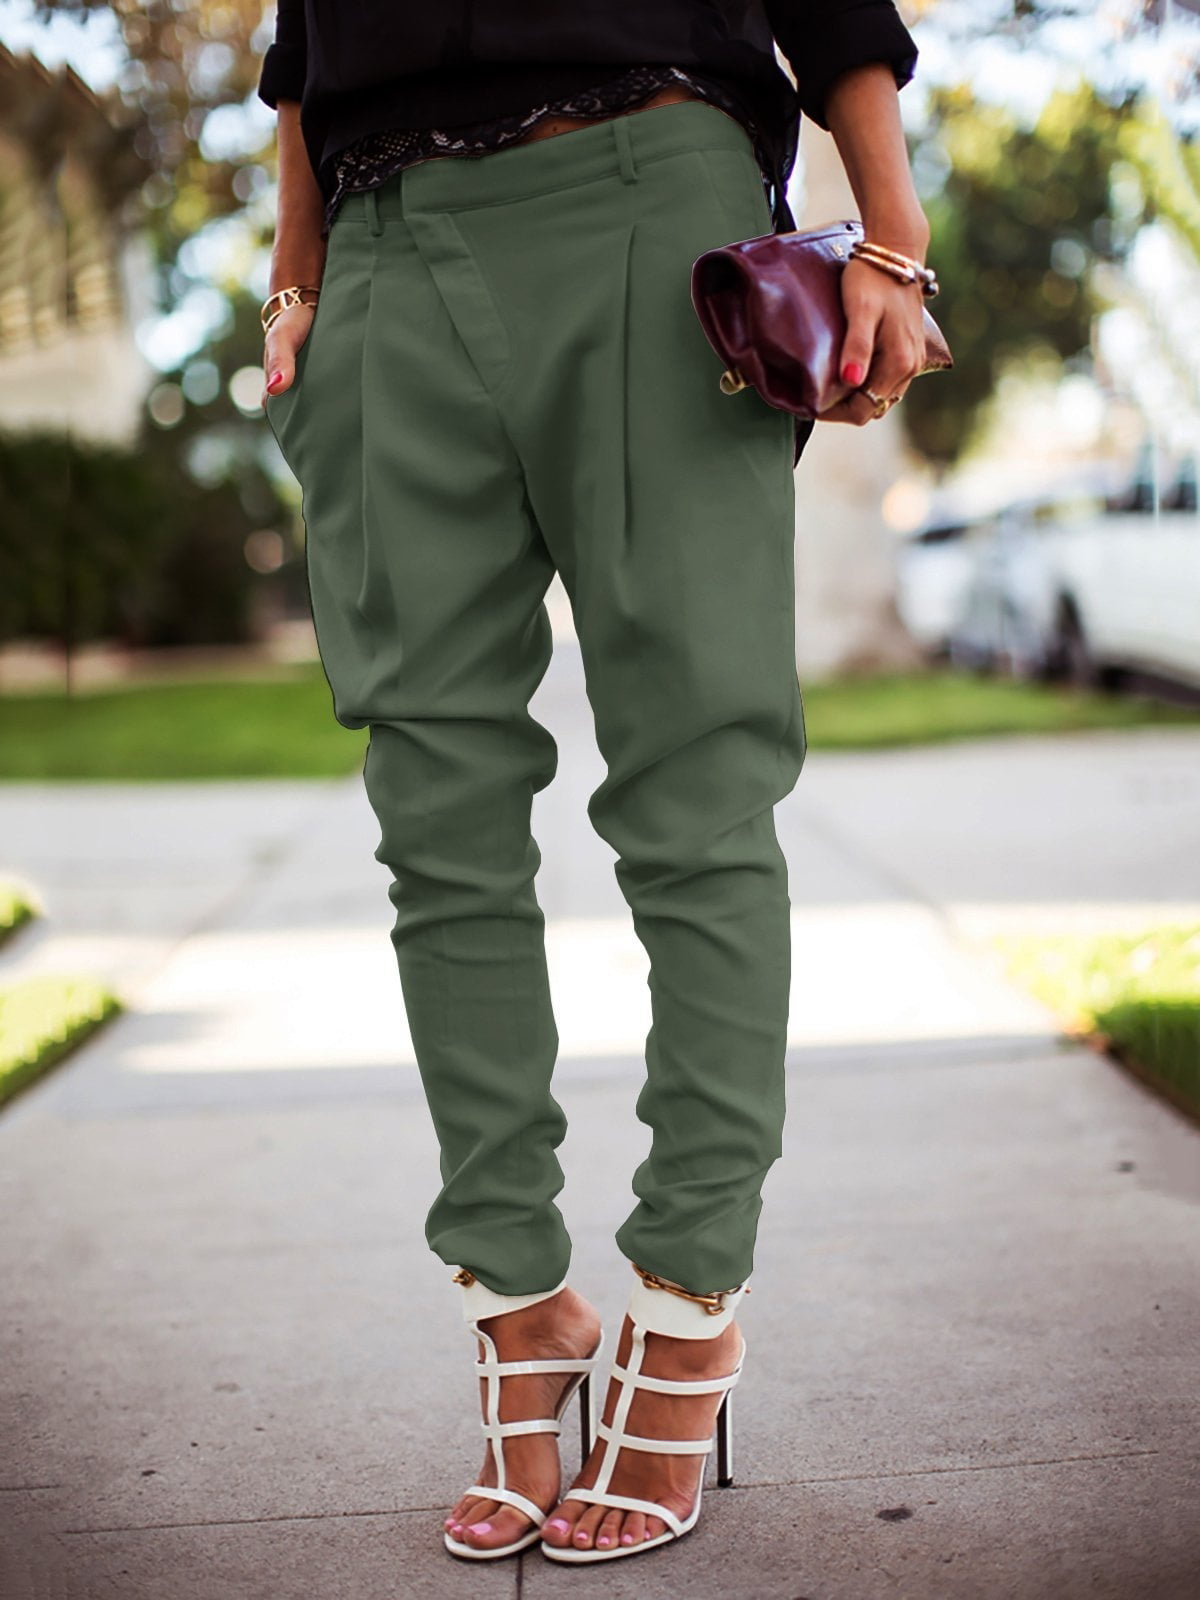 SySea - Women Solid Color Harem Pants Casual Slim Fit Trousers ...